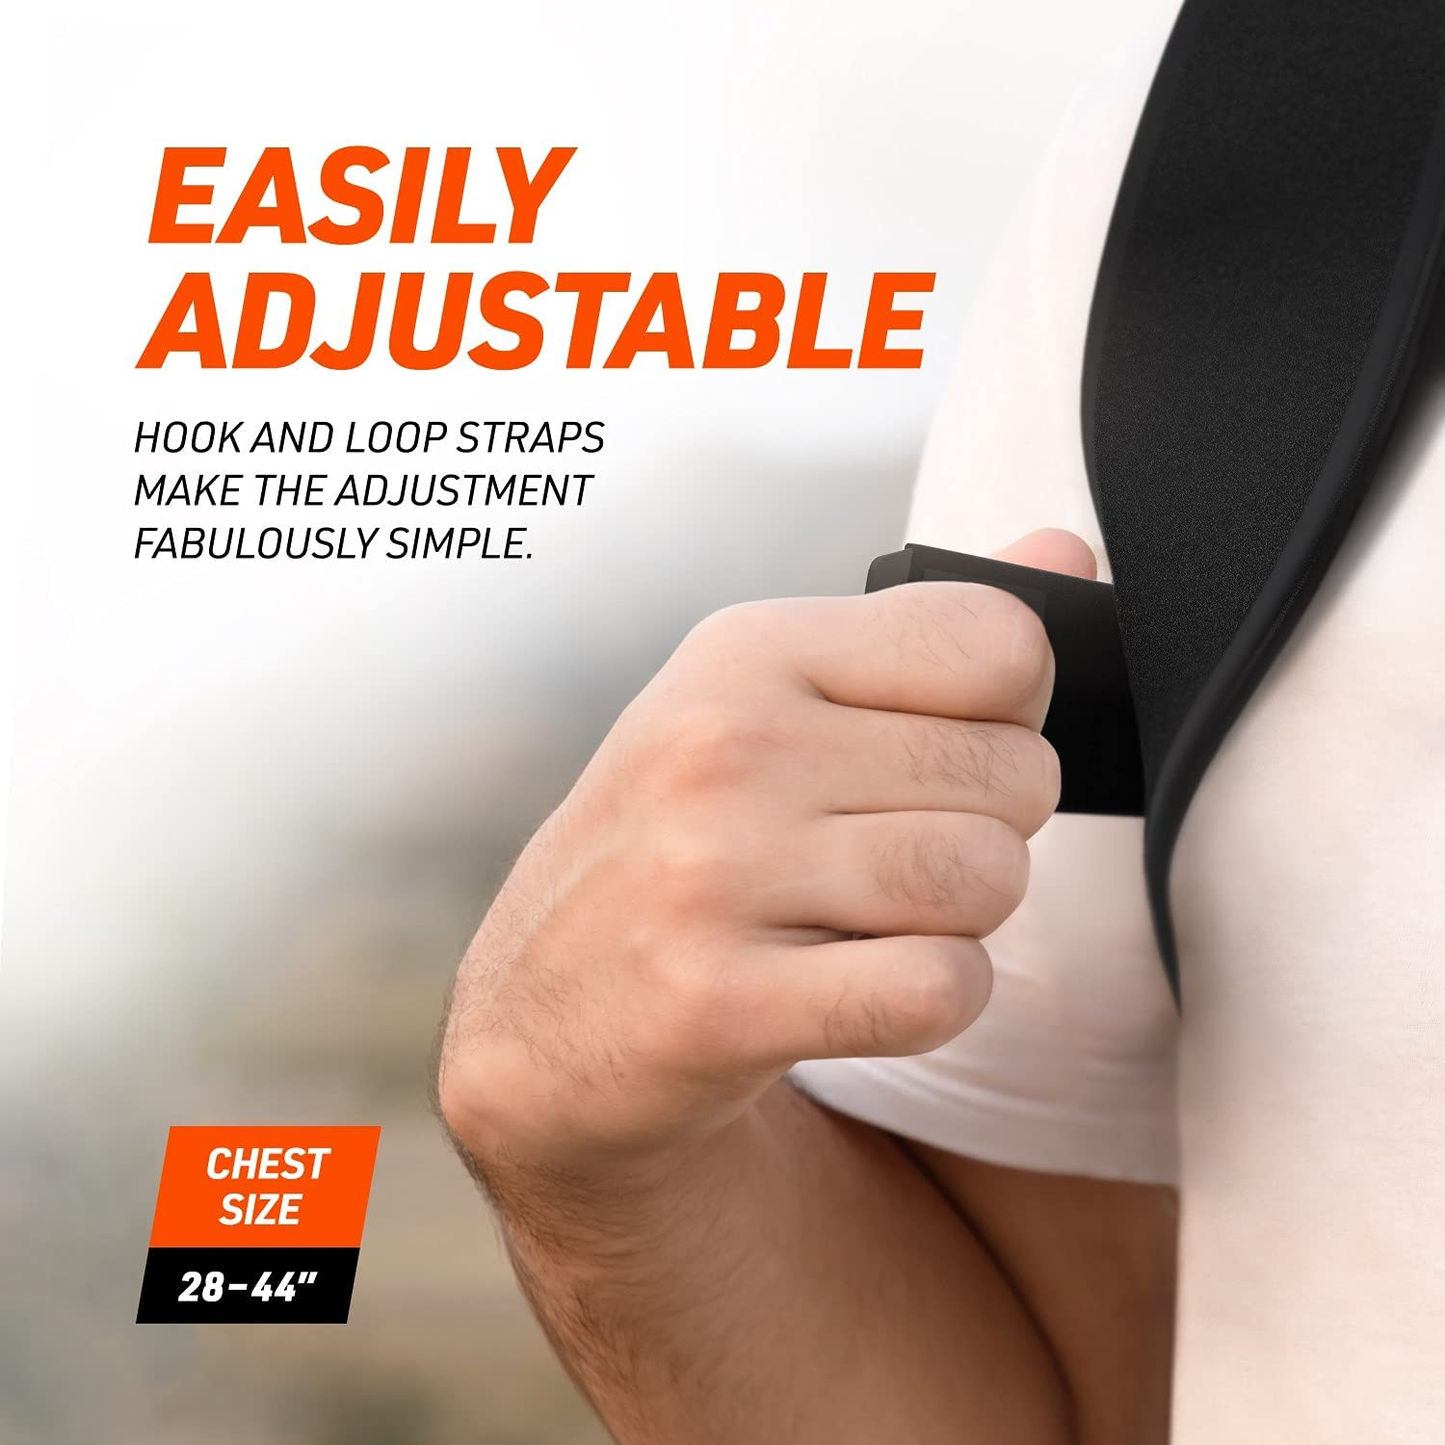 Posture Corrector for Men and Women - Adjustable Upper Back Brace for Clavicle to Support Neck, Back and Shoulder (Universal Fit, U.S. Design Patent)